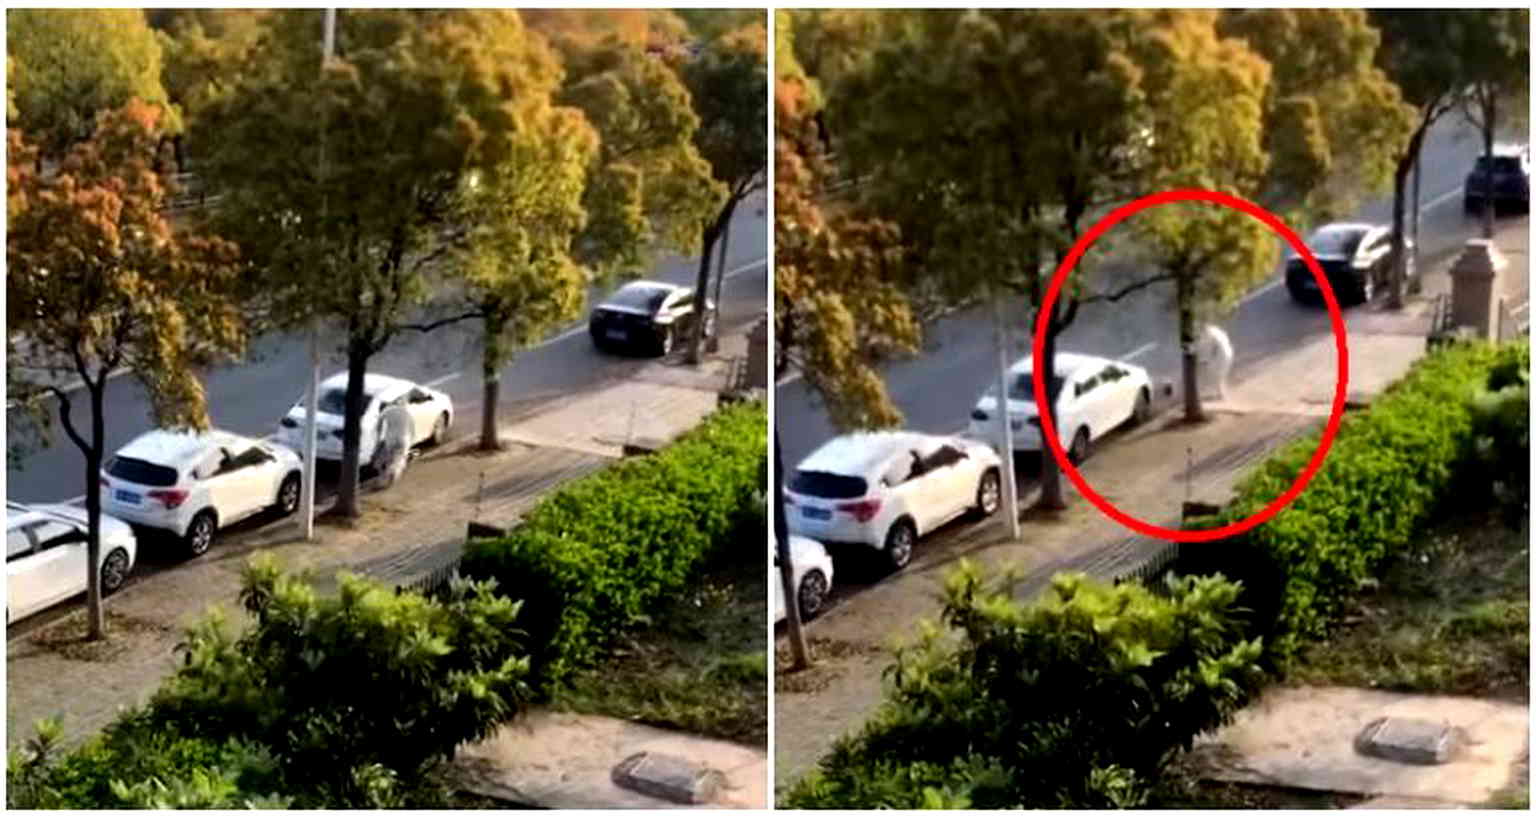 Healthcare worker filmed beating corgi to death in locked-down Shanghai sparks anger